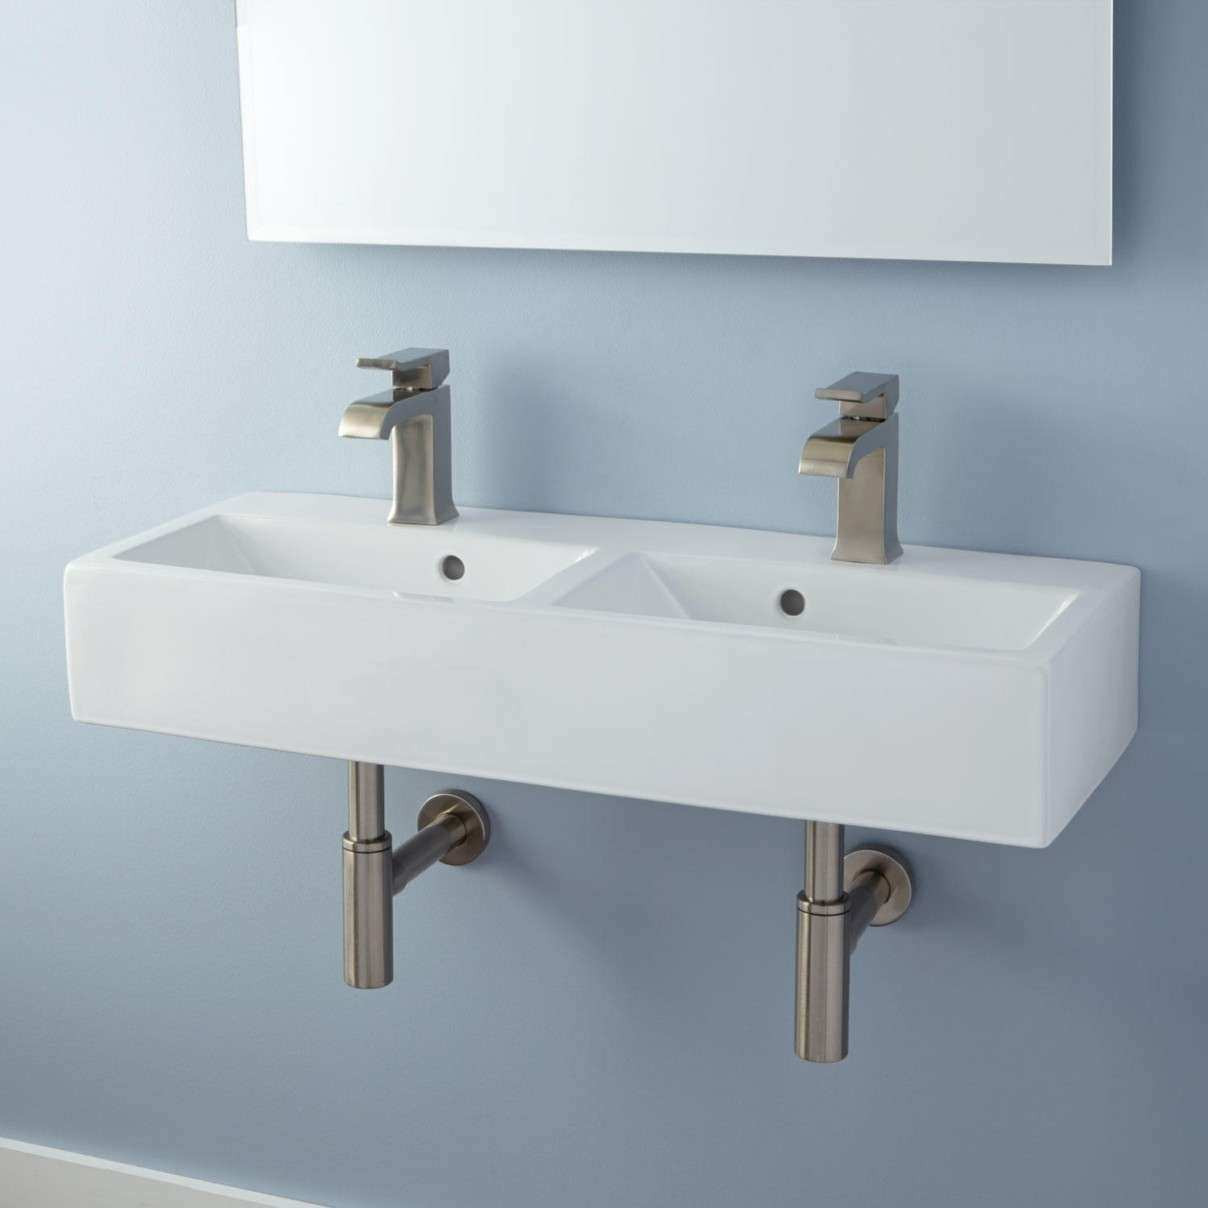 Pictures Suitable For Bathroom Walls
 Elegant Suitable for Bathroom Walls